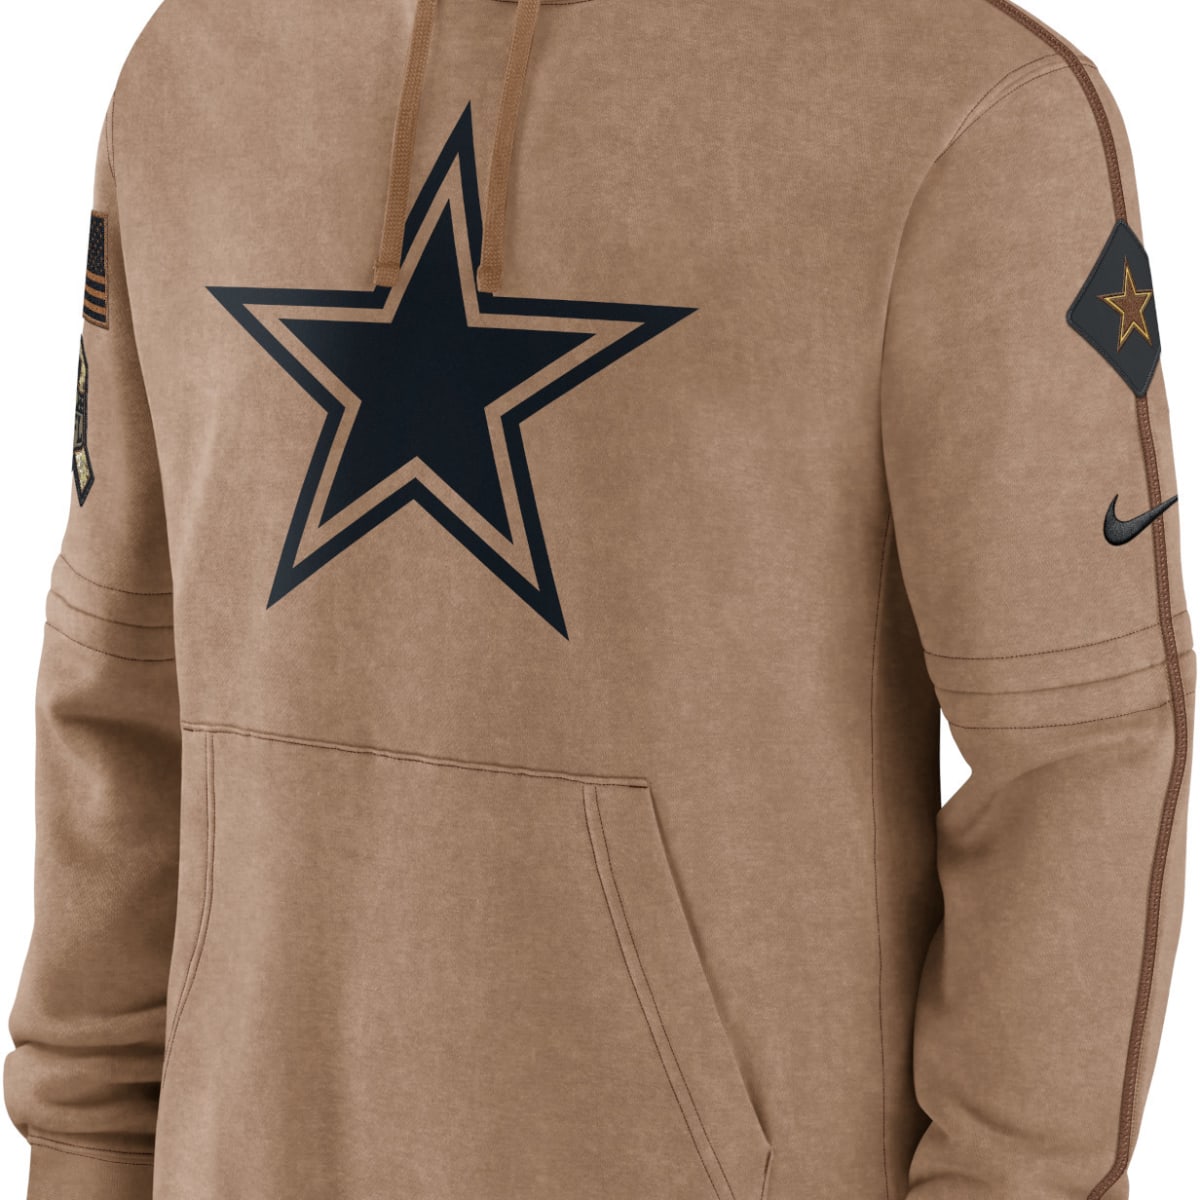 Dallas Cowboys Jerseys & Teamwear, NFL Merchandise